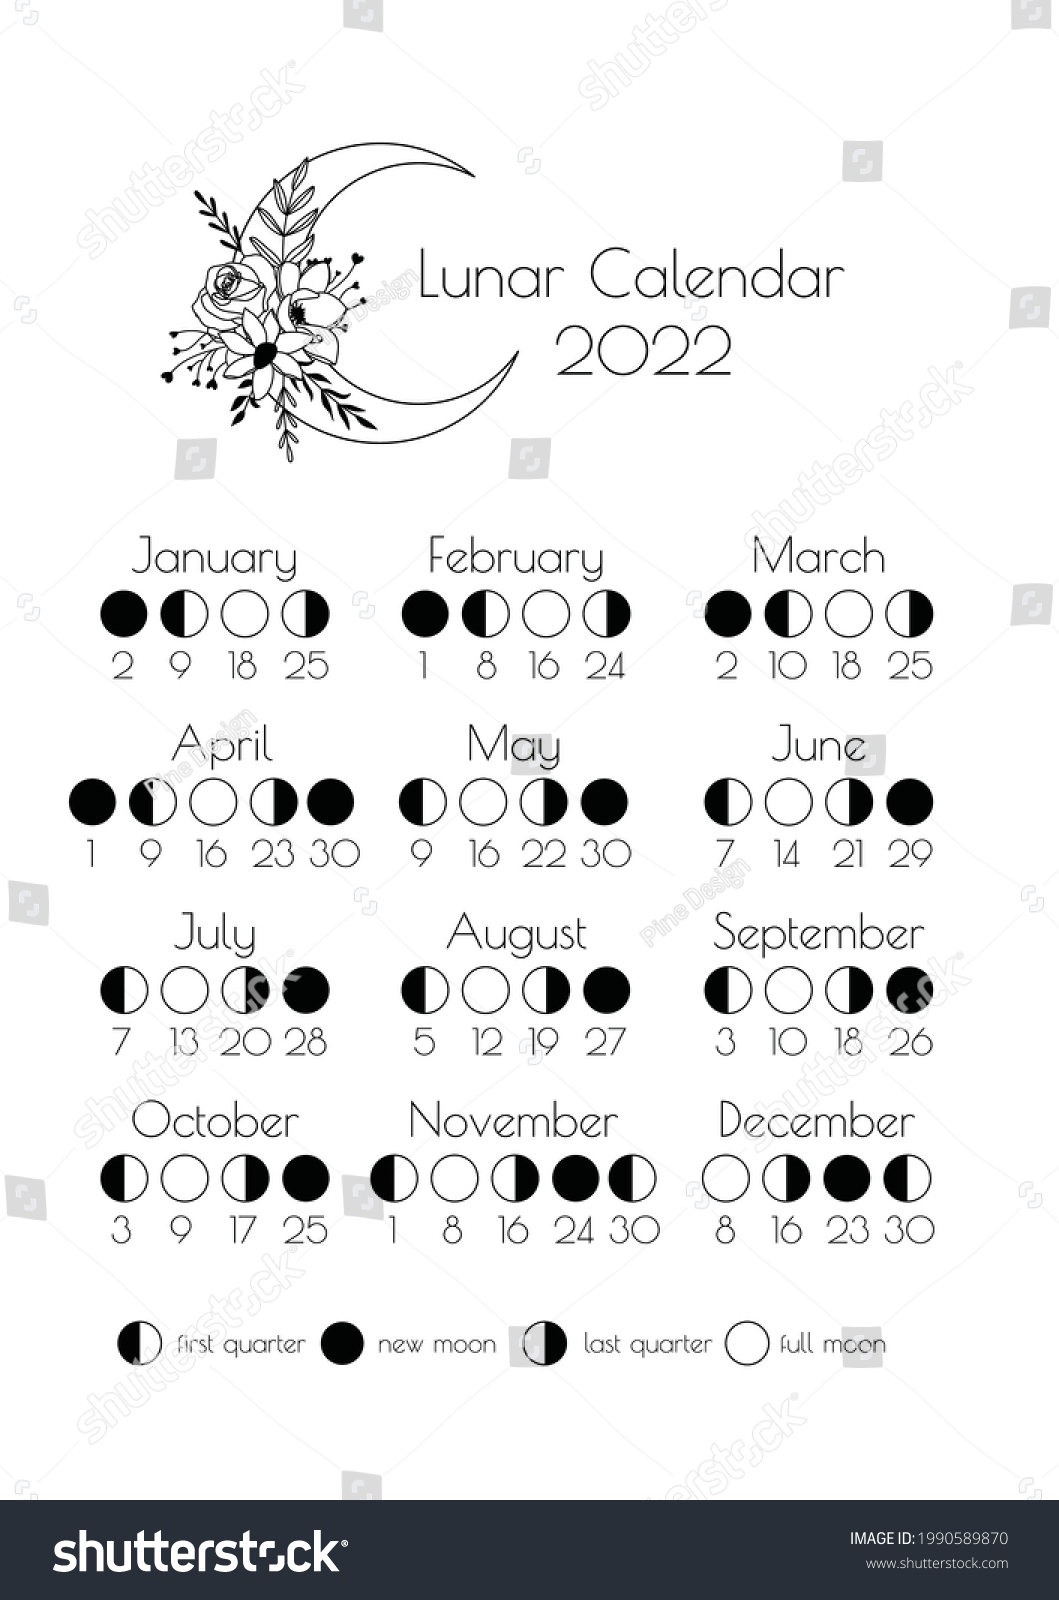 New Moon 2022 Calendar Moon Calendar 2022 Moon Phases 2022 Stock Vector (Royalty Free) 1990589870